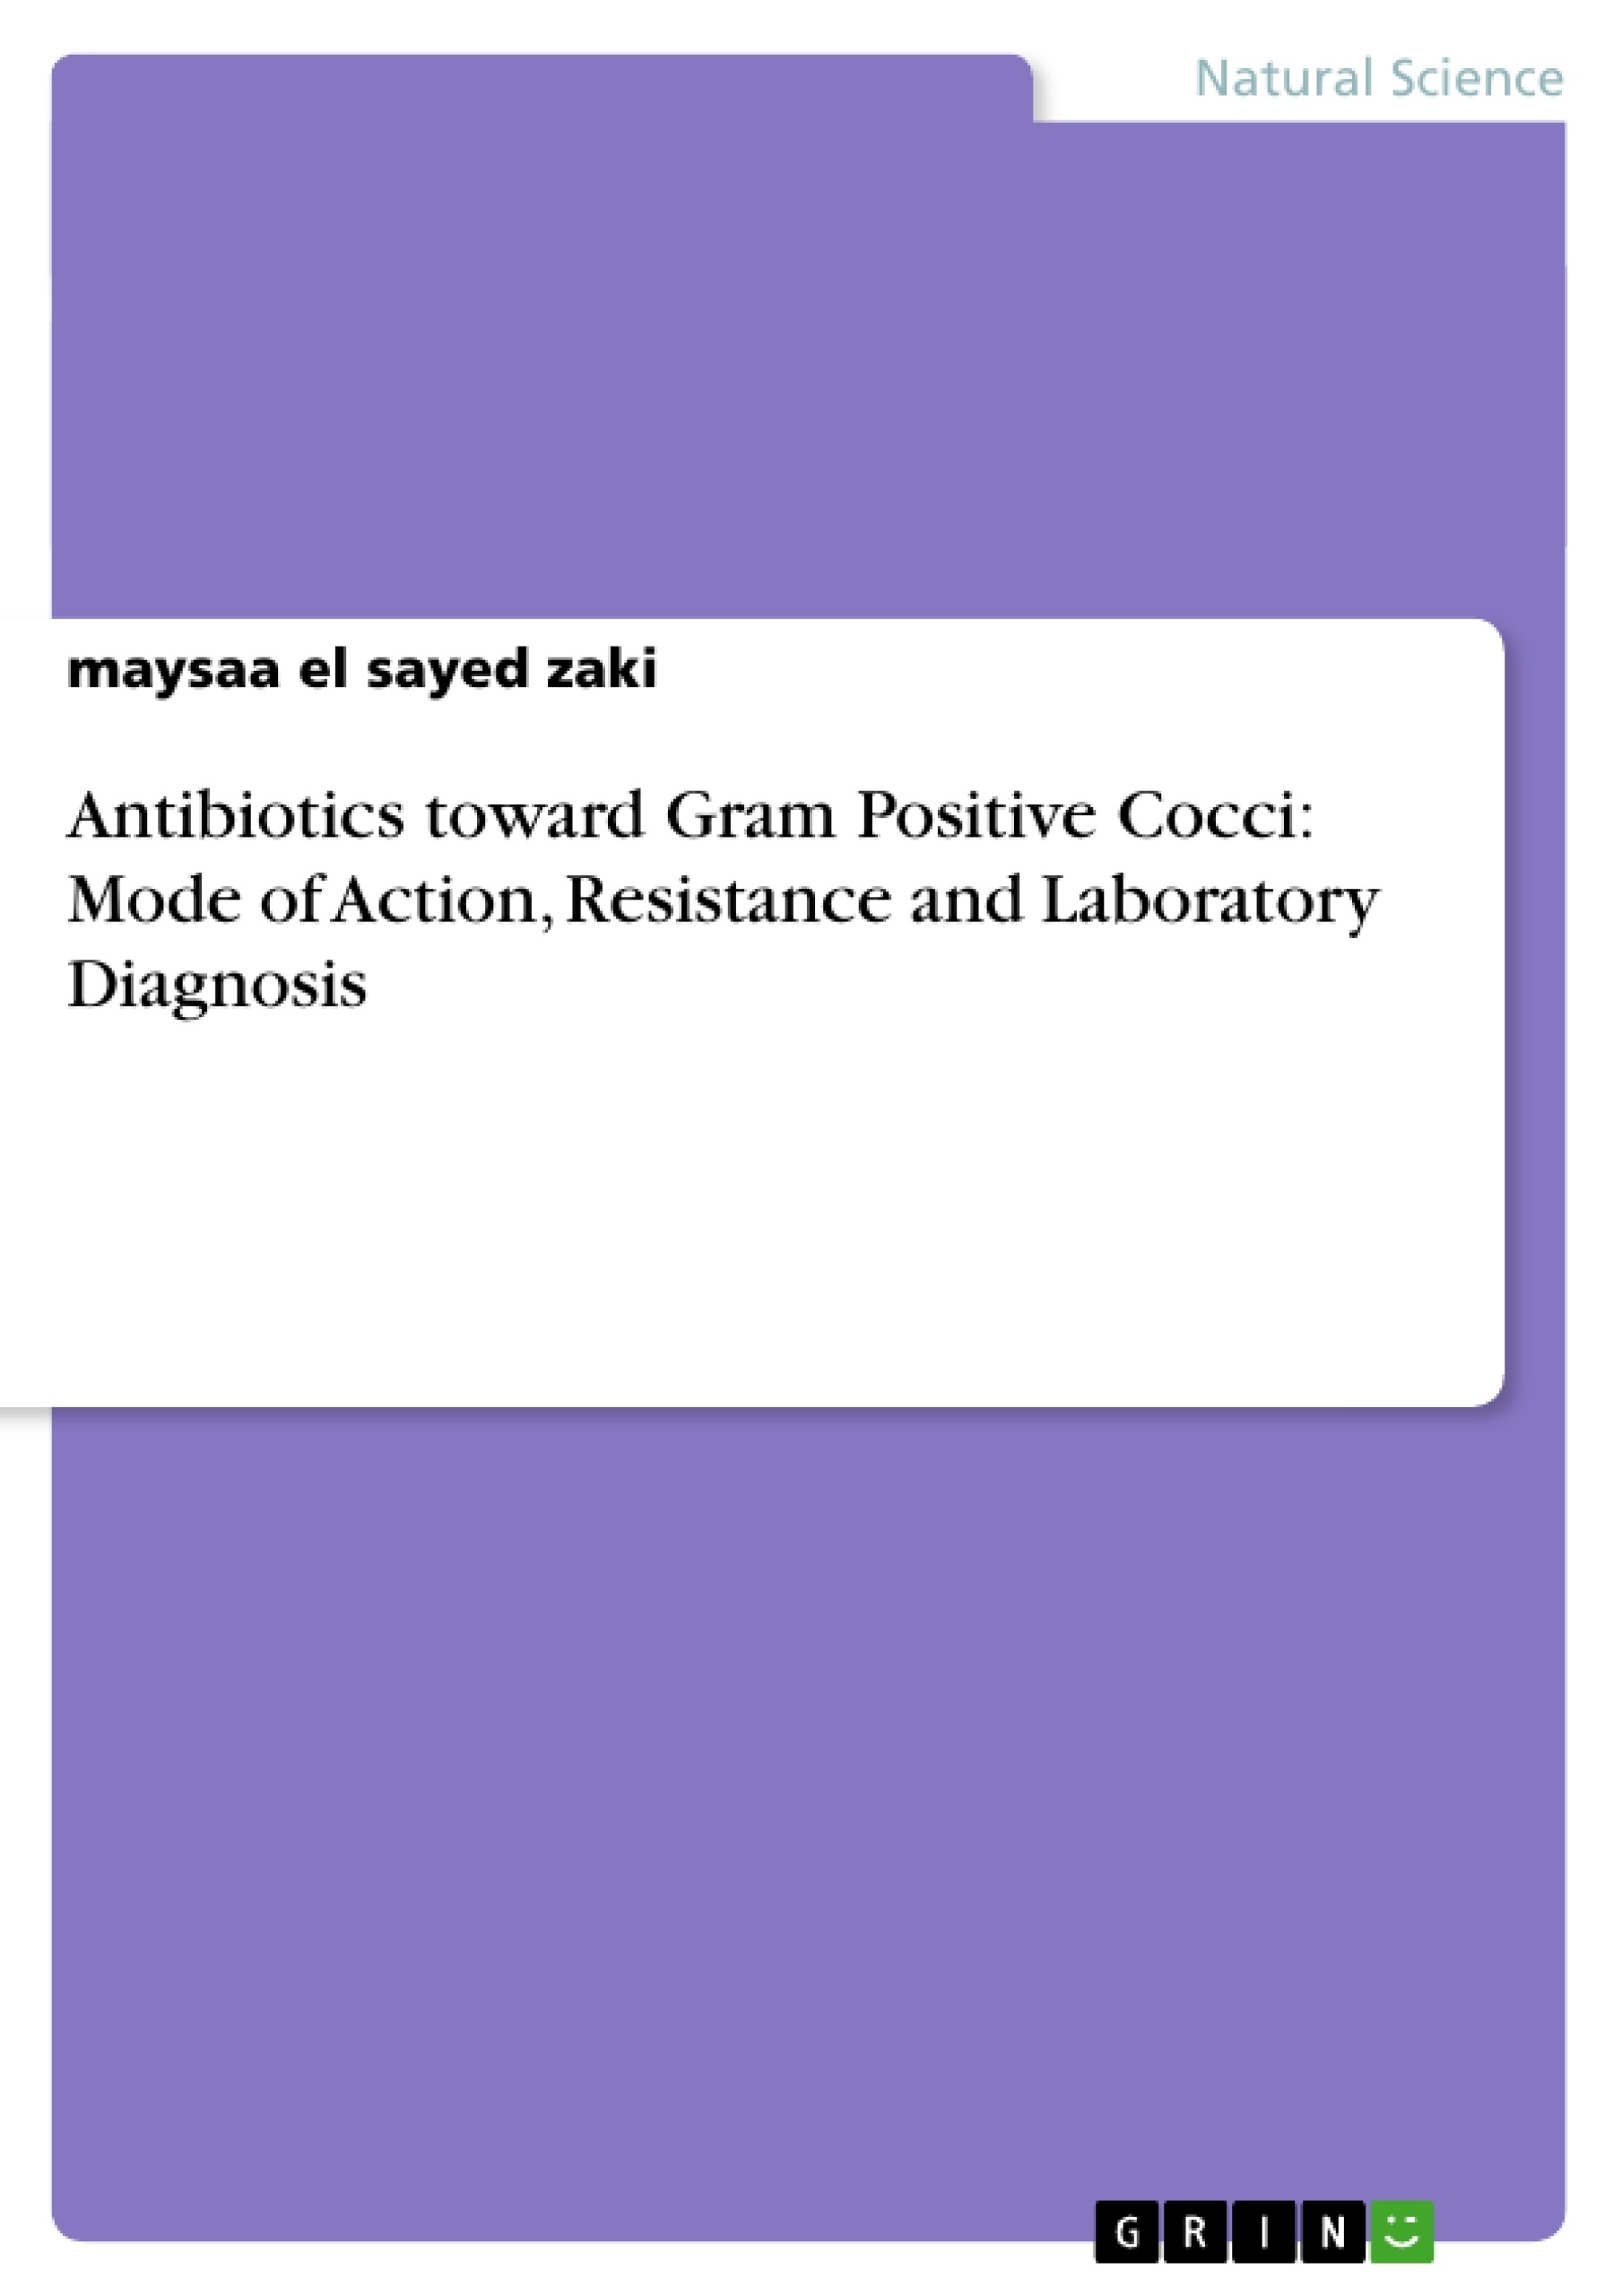 Title: Antibiotics toward Gram Positive Cocci: Mode of Action, Resistance and Laboratory Diagnosis